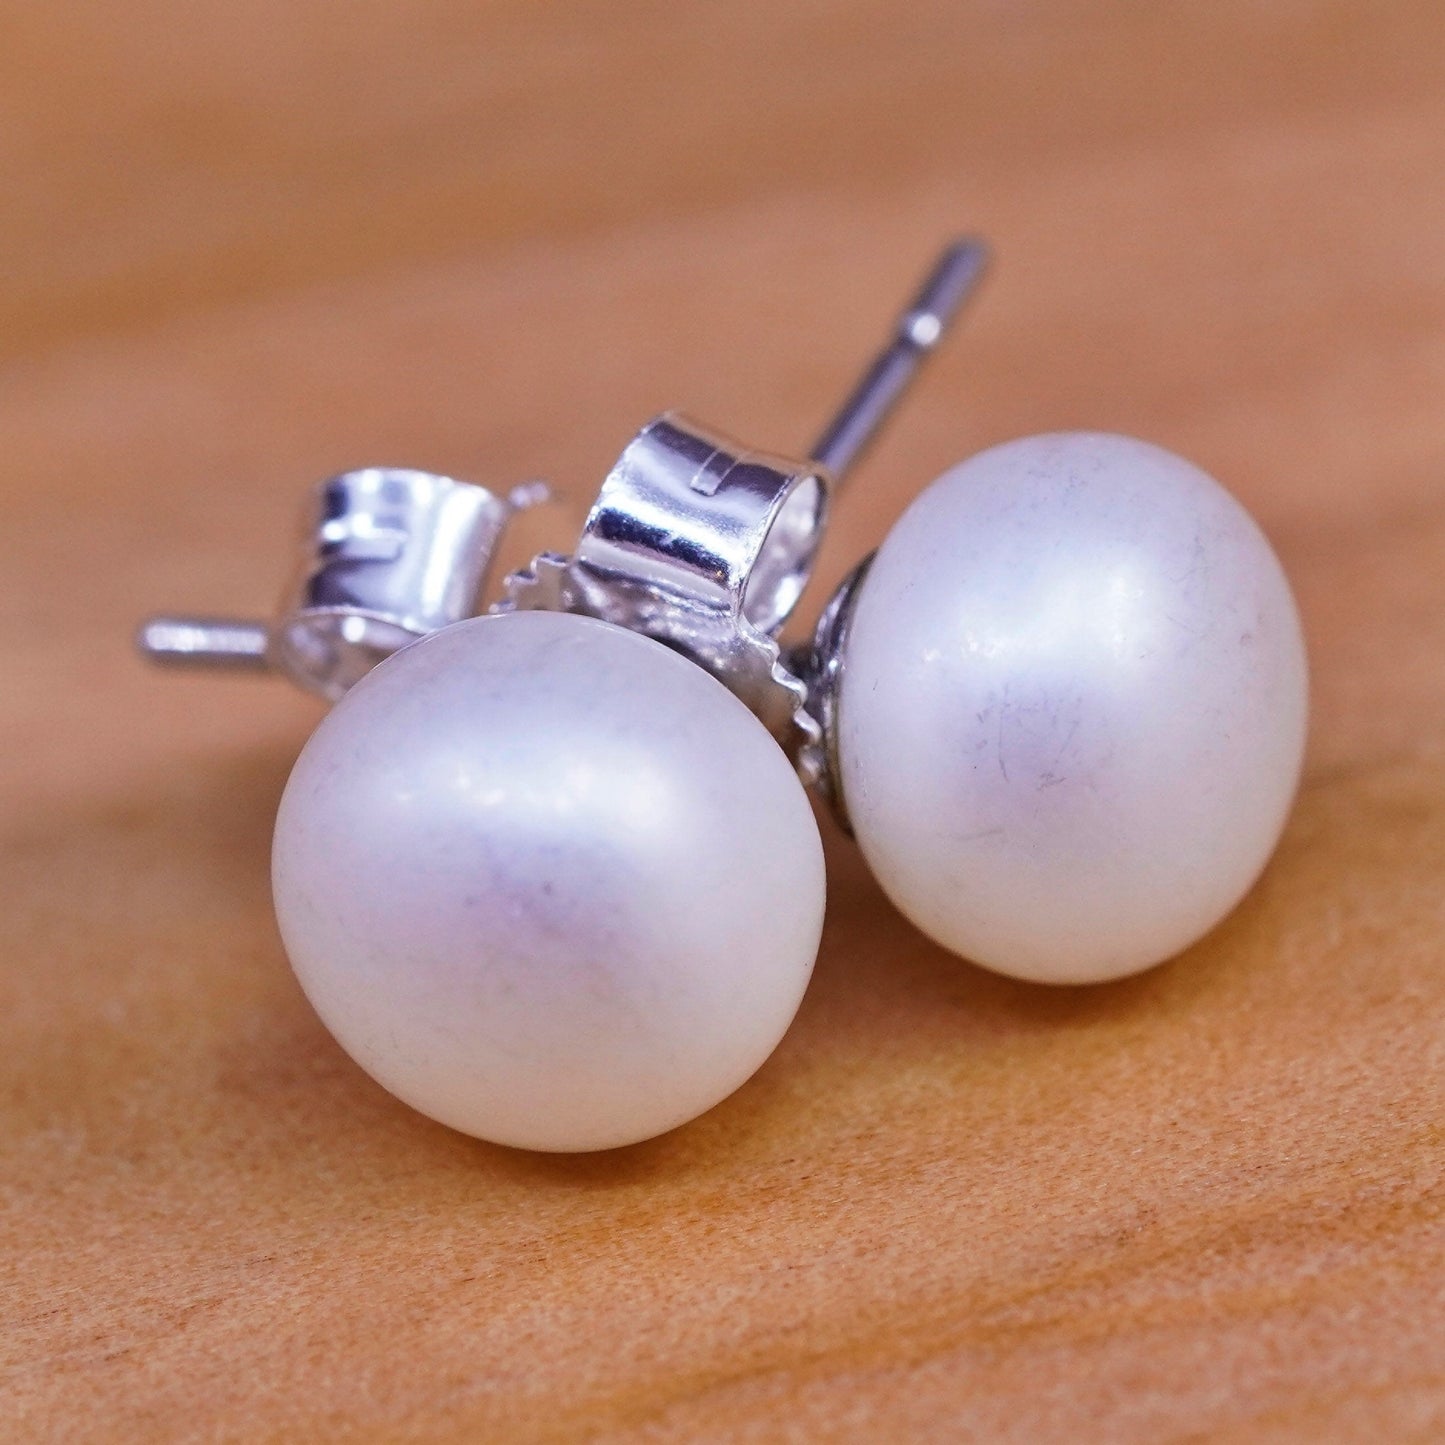 Vintage Sterling silver handmade earrings, 925 silver studs with pearl